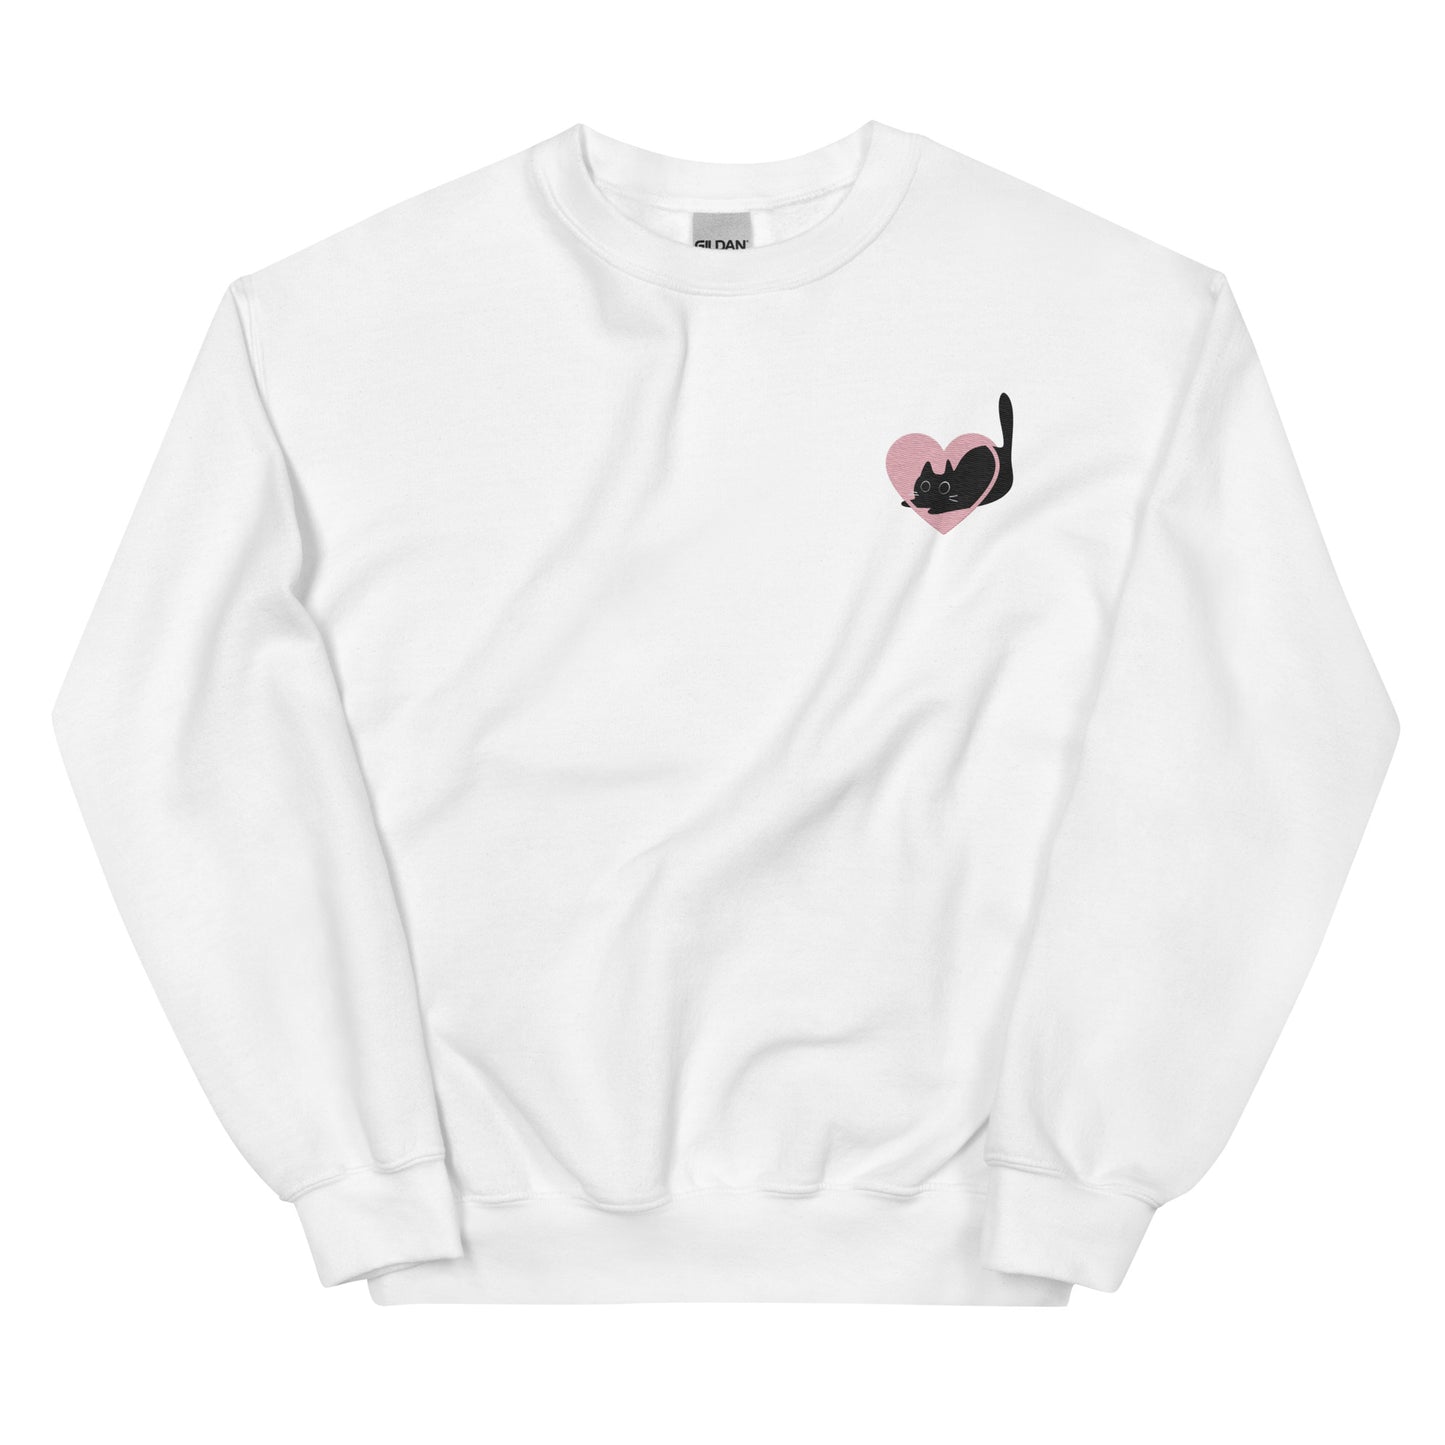 Embroidered Black Cat and Heart Valentine's Day Unisex Sweatshirt